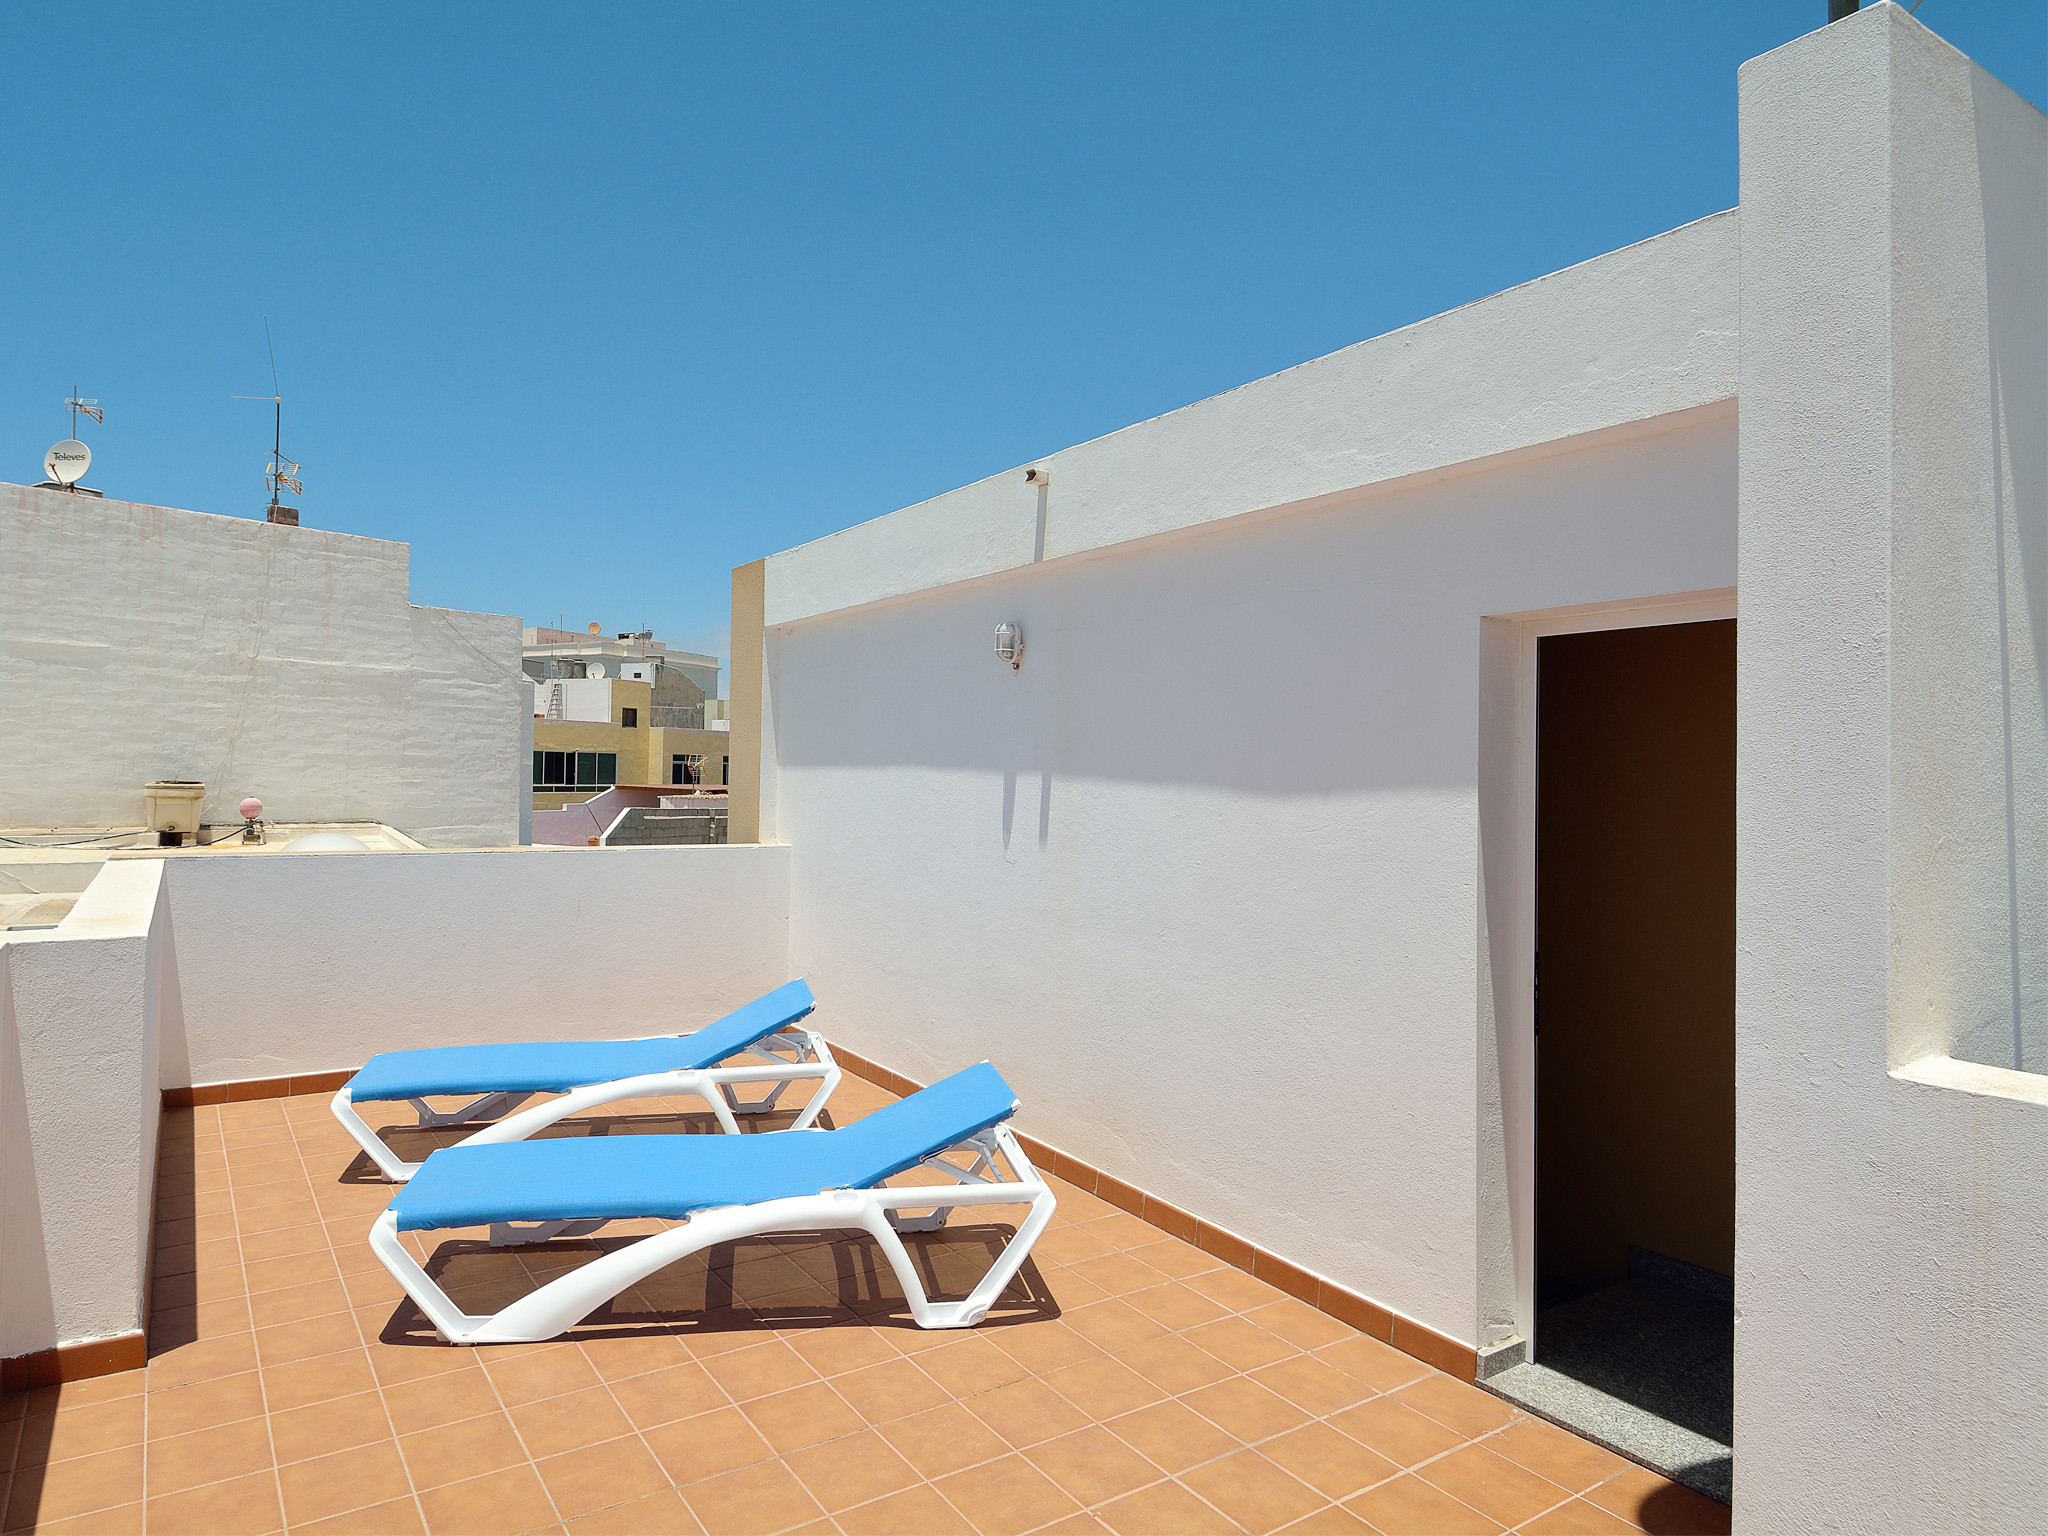 Minimalist Apartments To Rent In Arrecife Lanzarote with Simple Decor